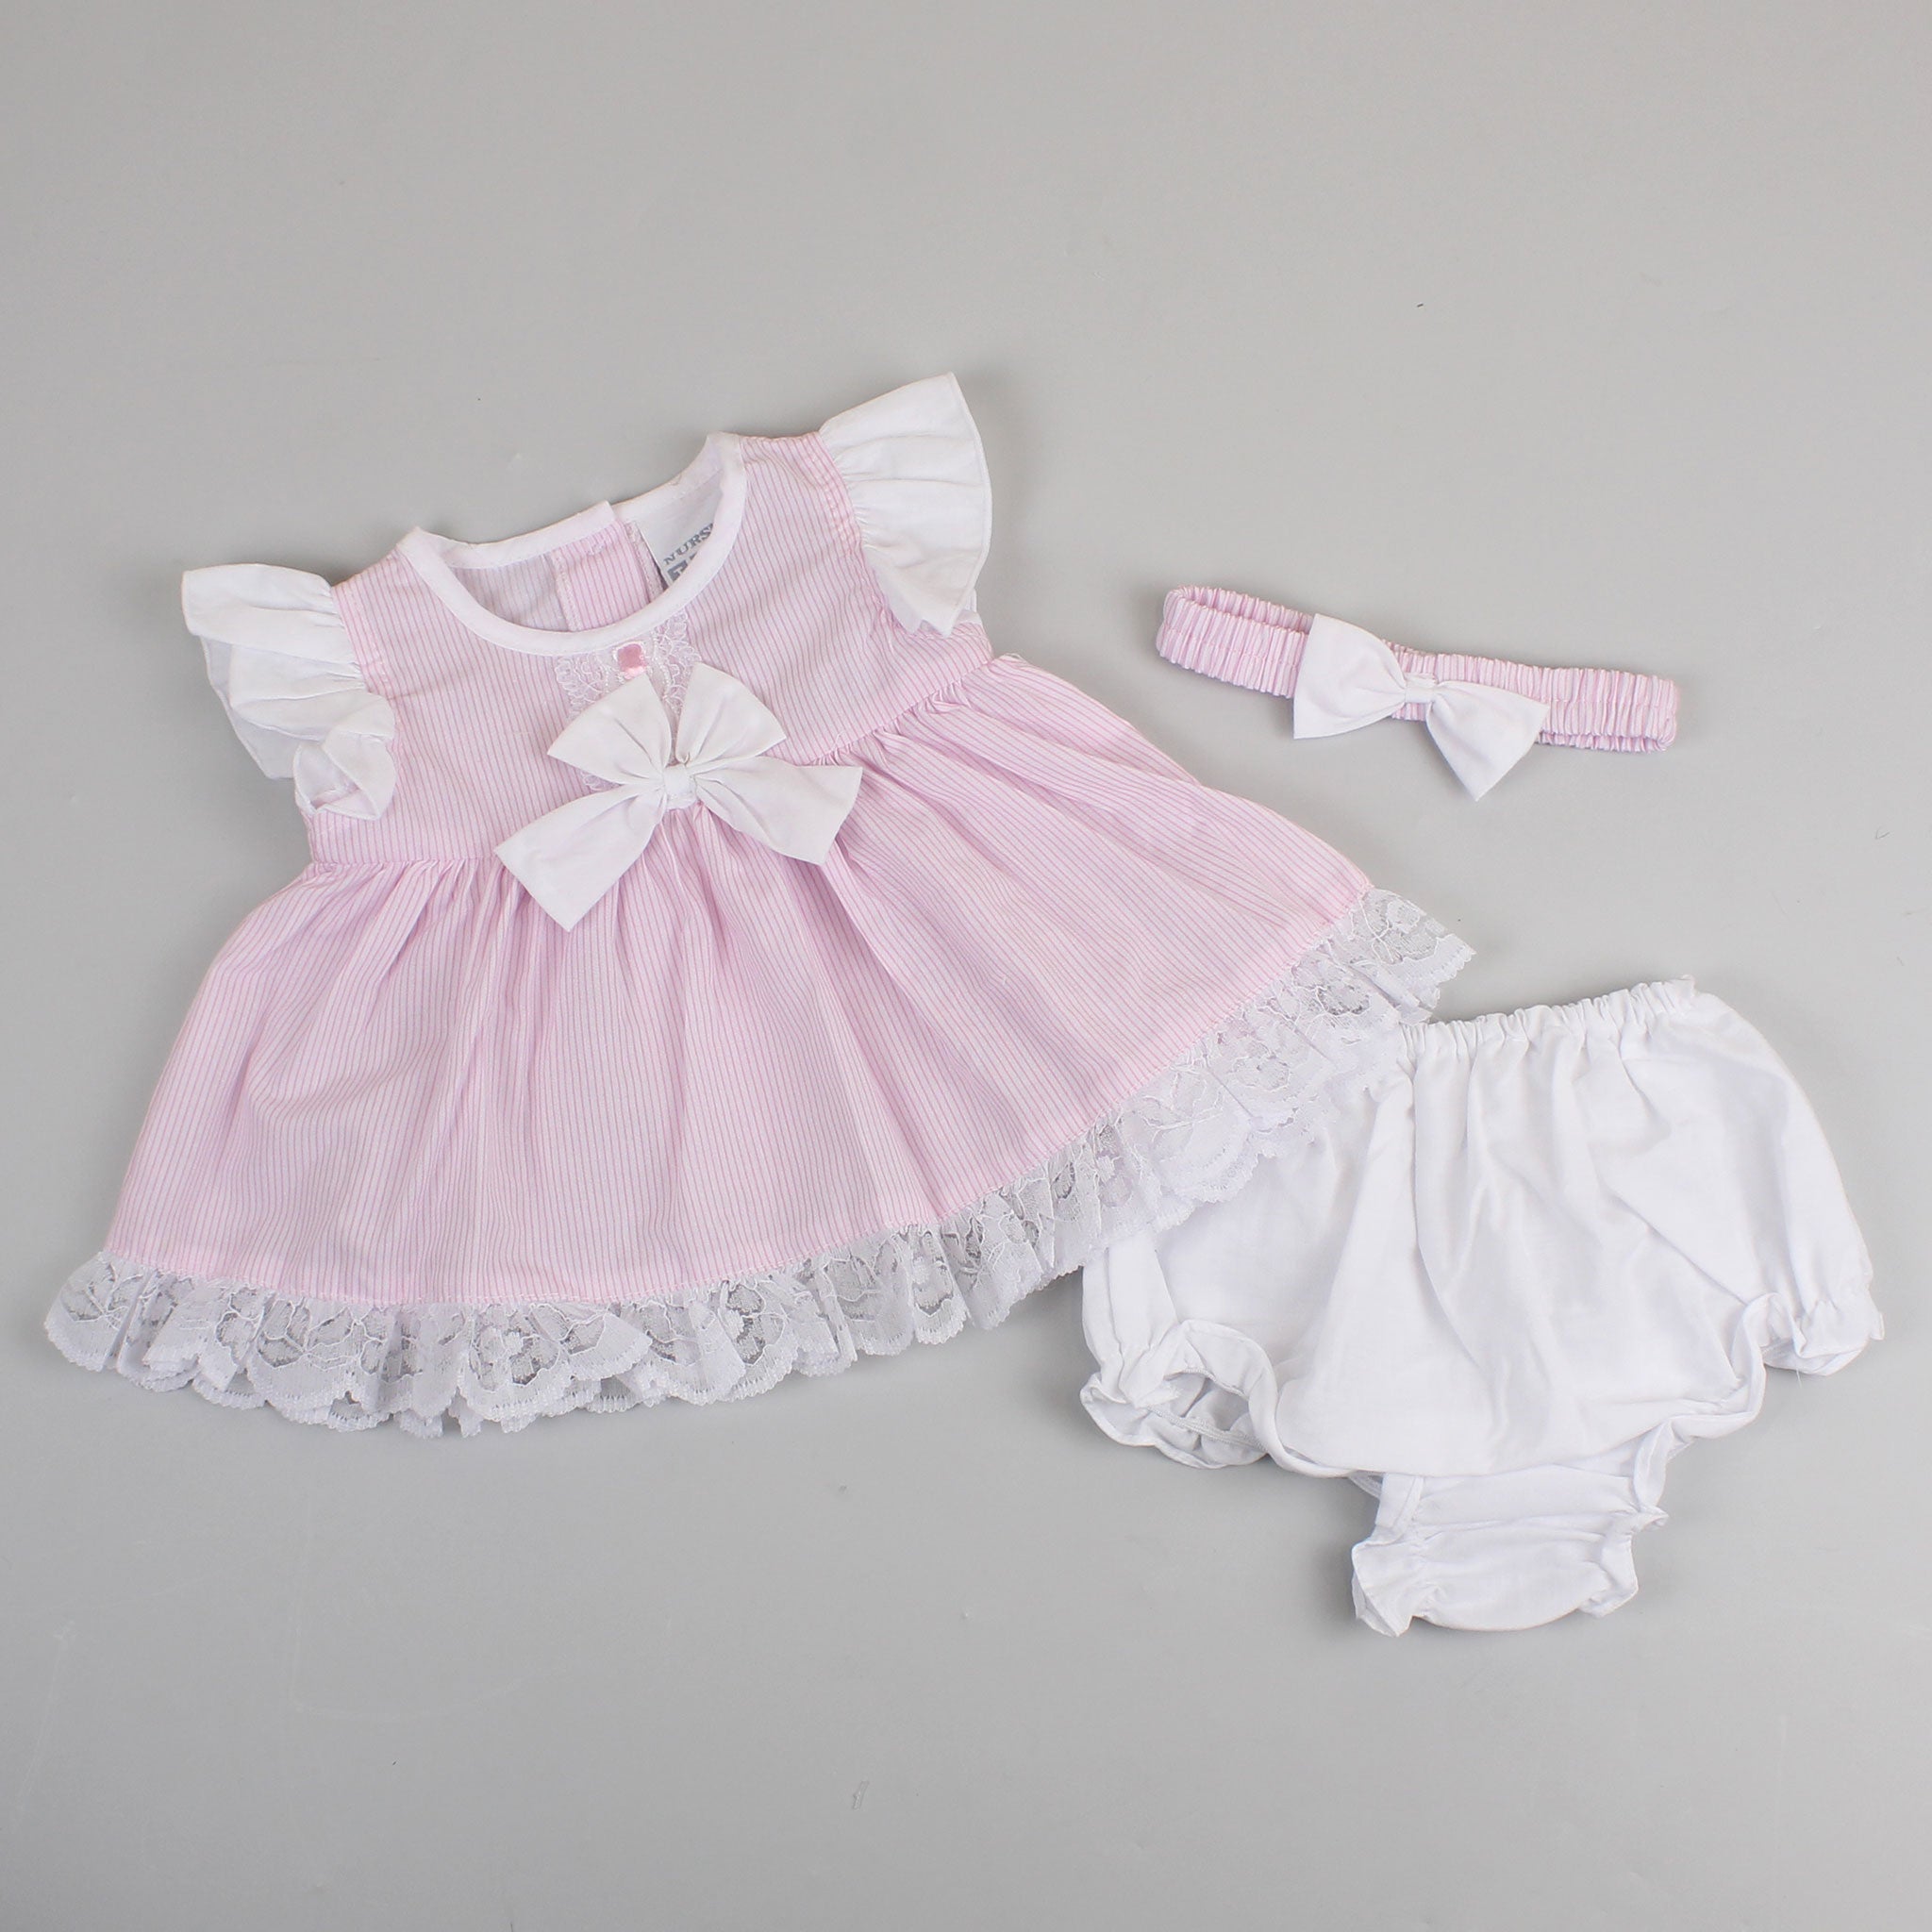 baby girl pink summer sun dress outfit